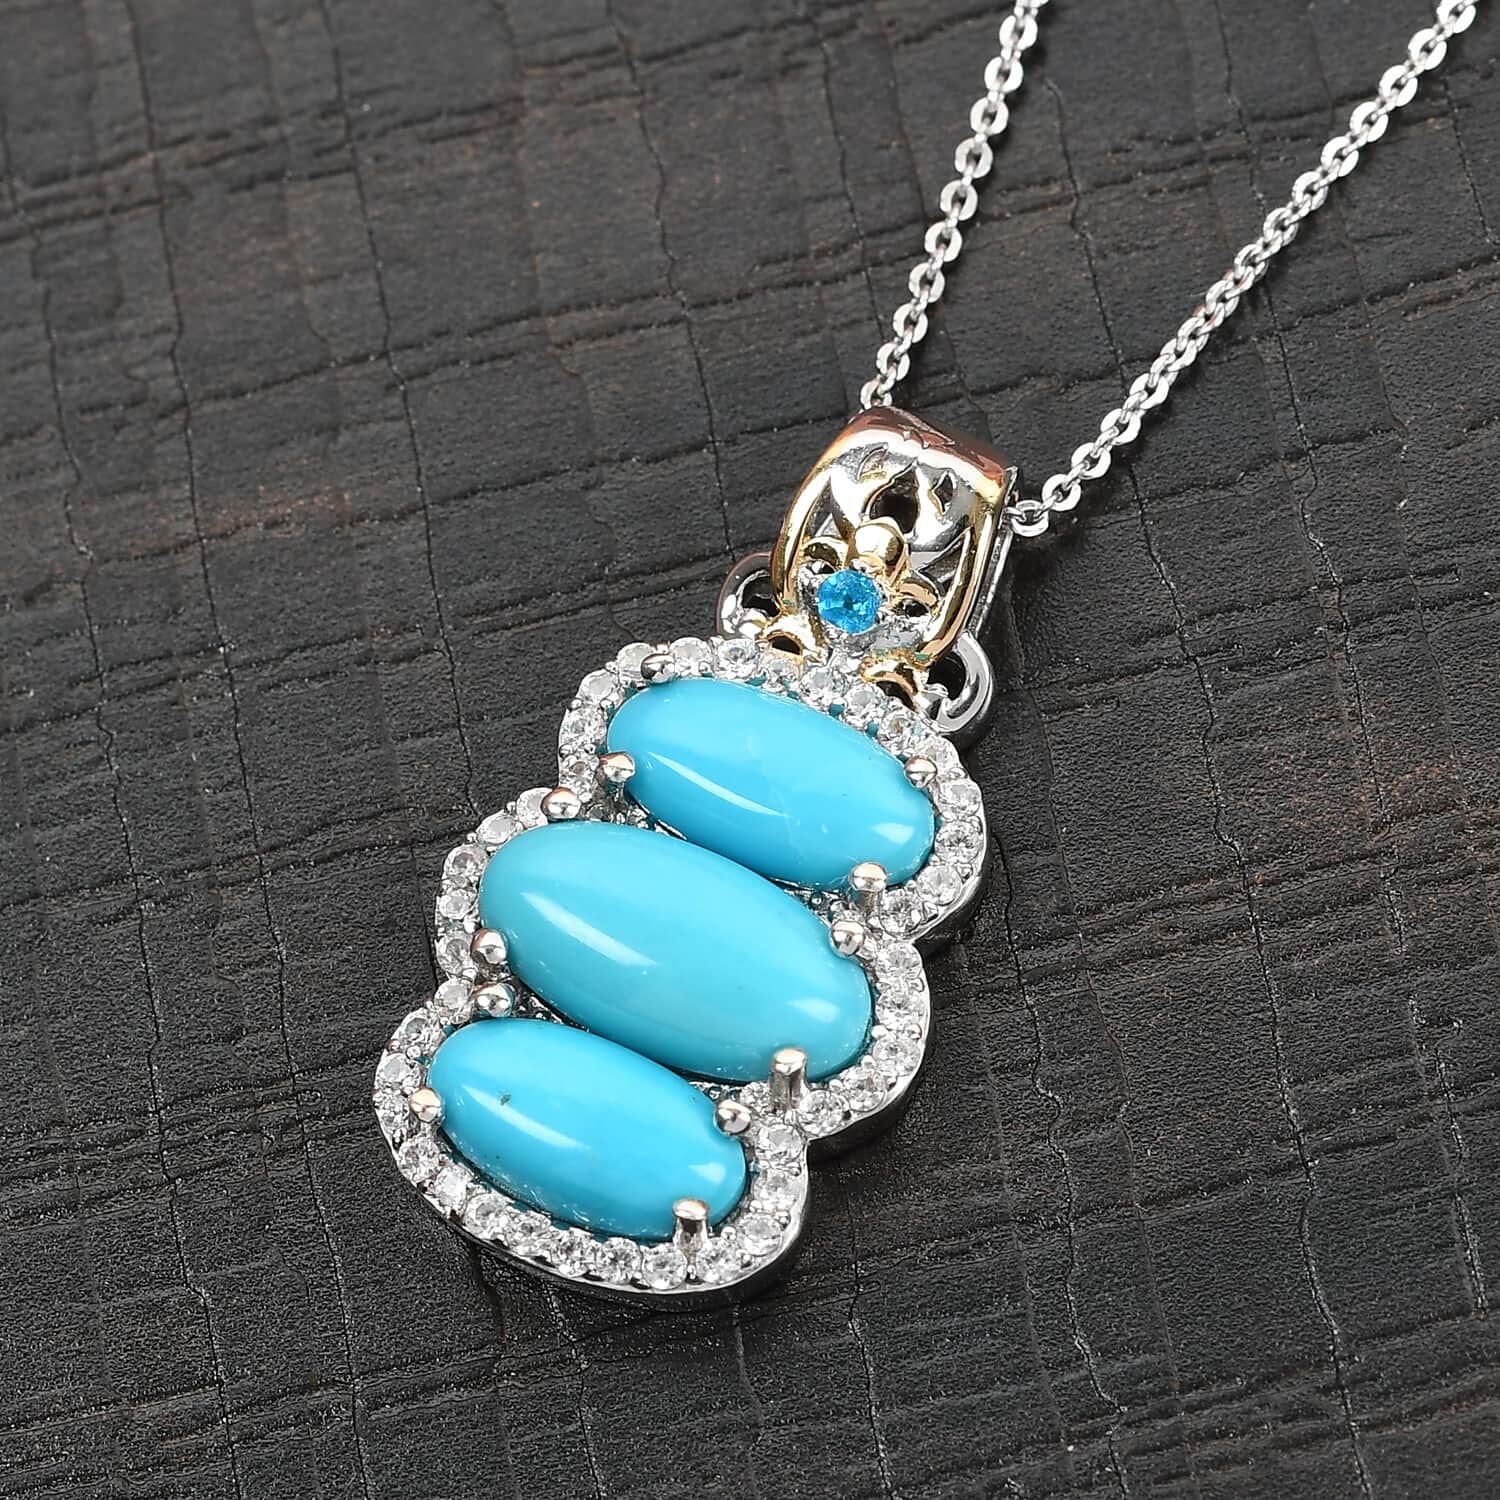 Buy Sleeping Beauty Turquoise and Multi Gemstone Pendant Necklace